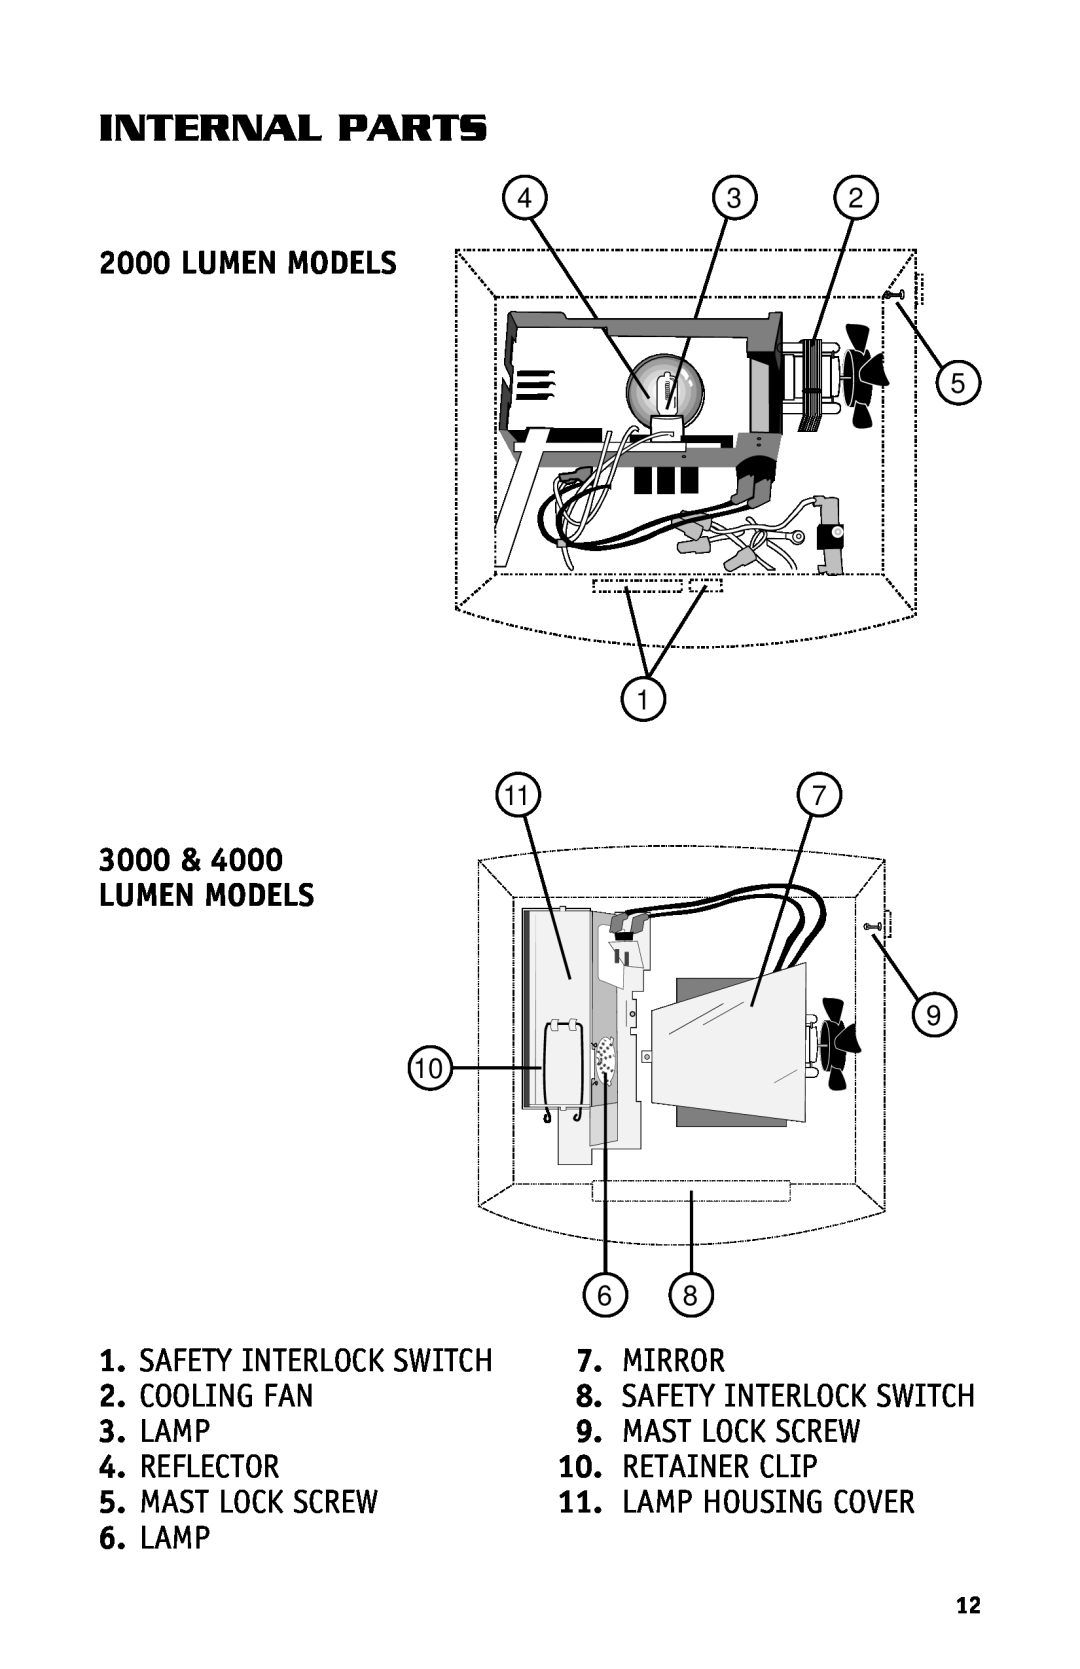 Dukane Projectors manual Internal Parts, Lumen Models, Mirror, Cooling Fan, Lamp, Mast Lock Screw, Reflector, Retainer Clip 